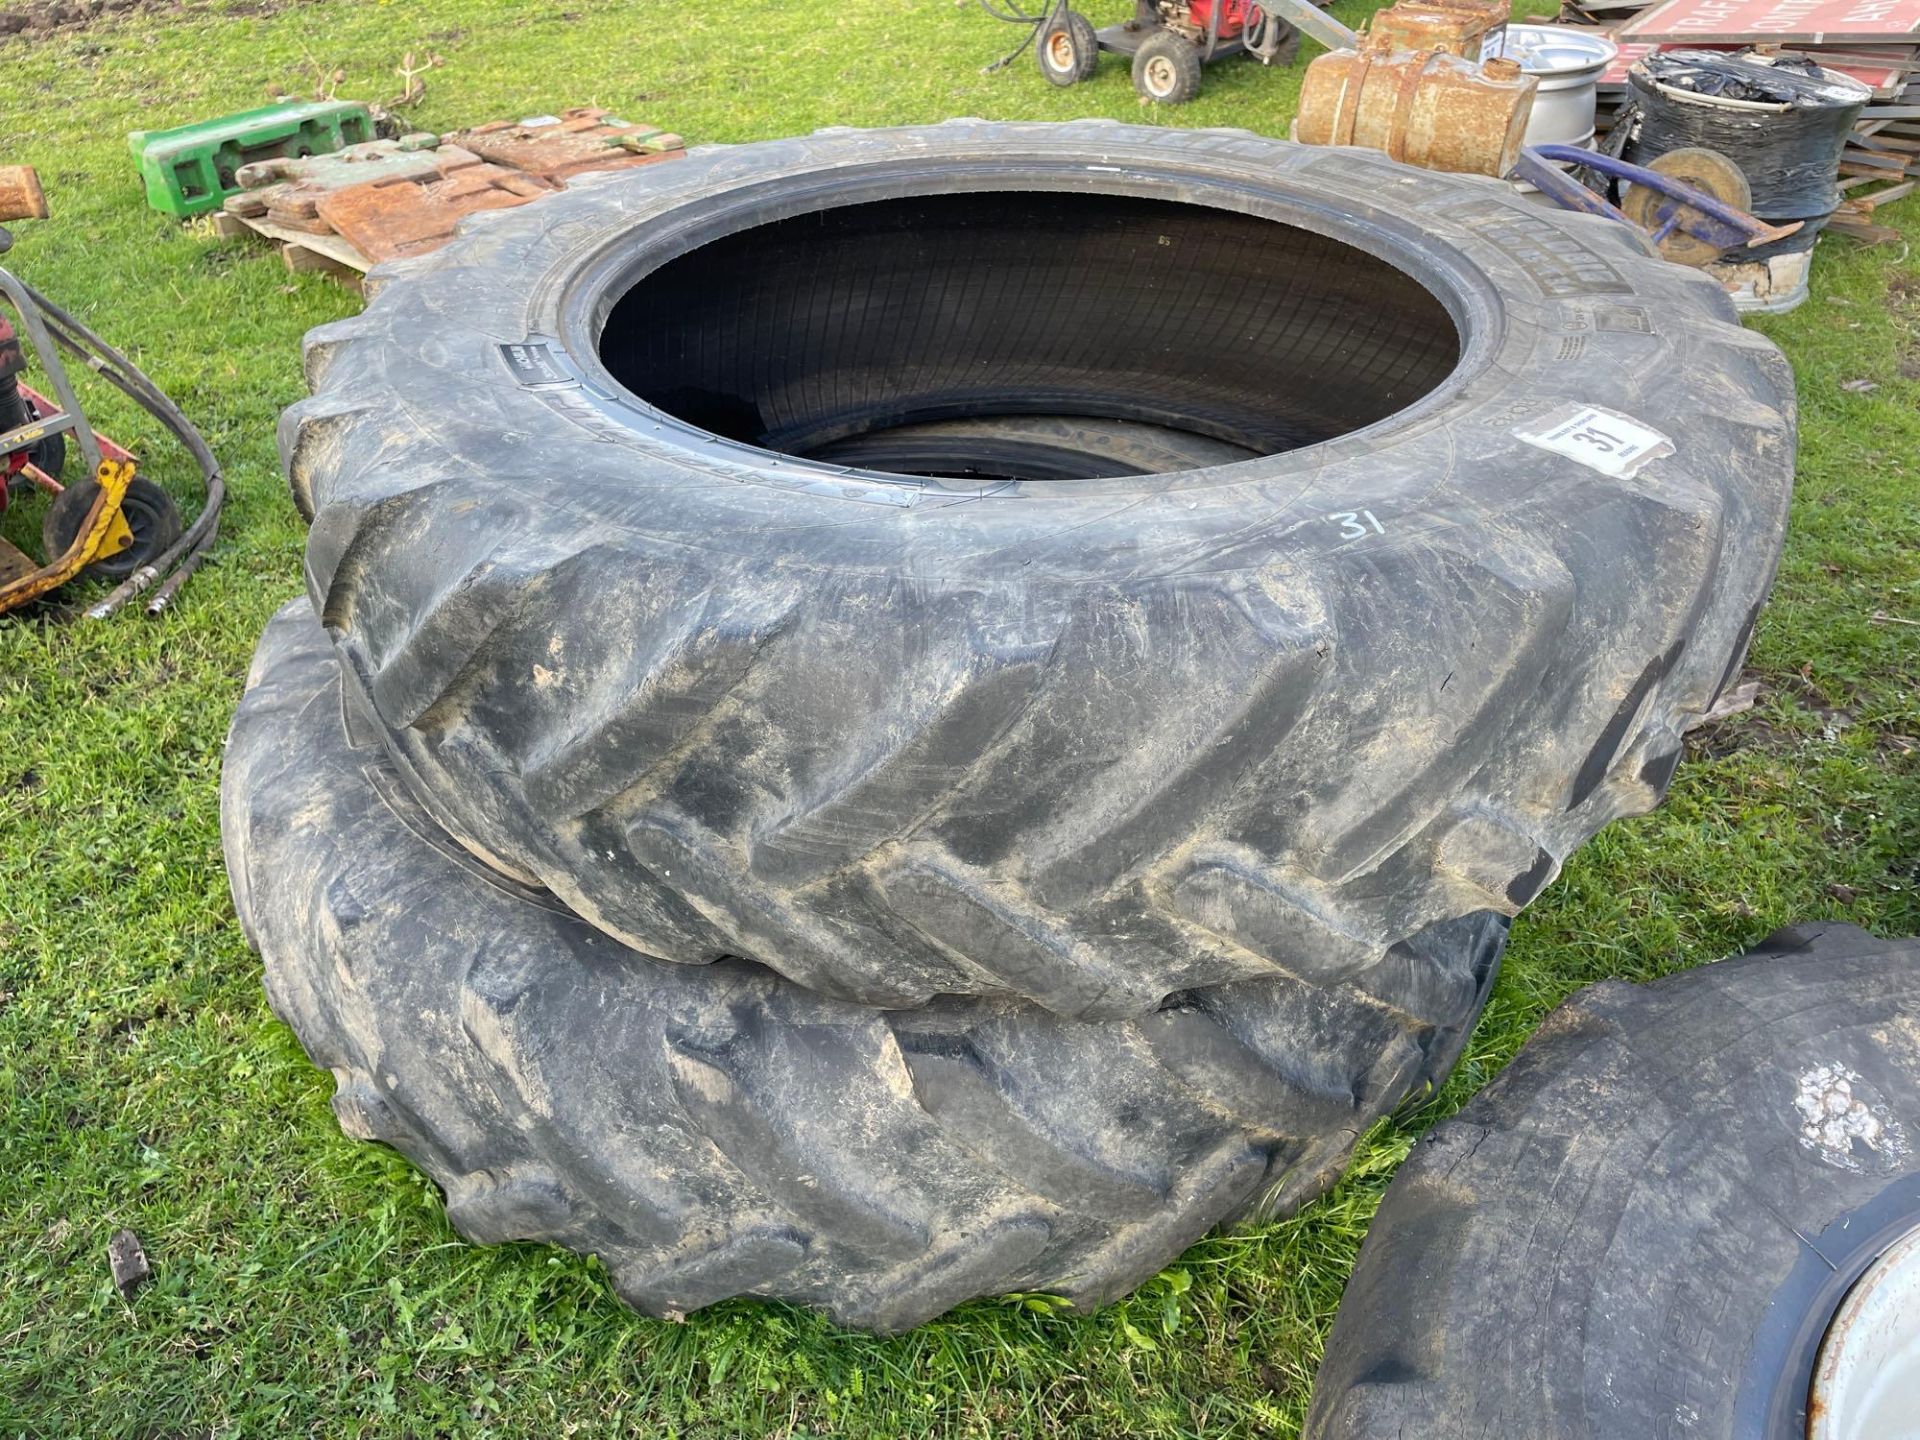 Pair of 380/85 R34 tyres